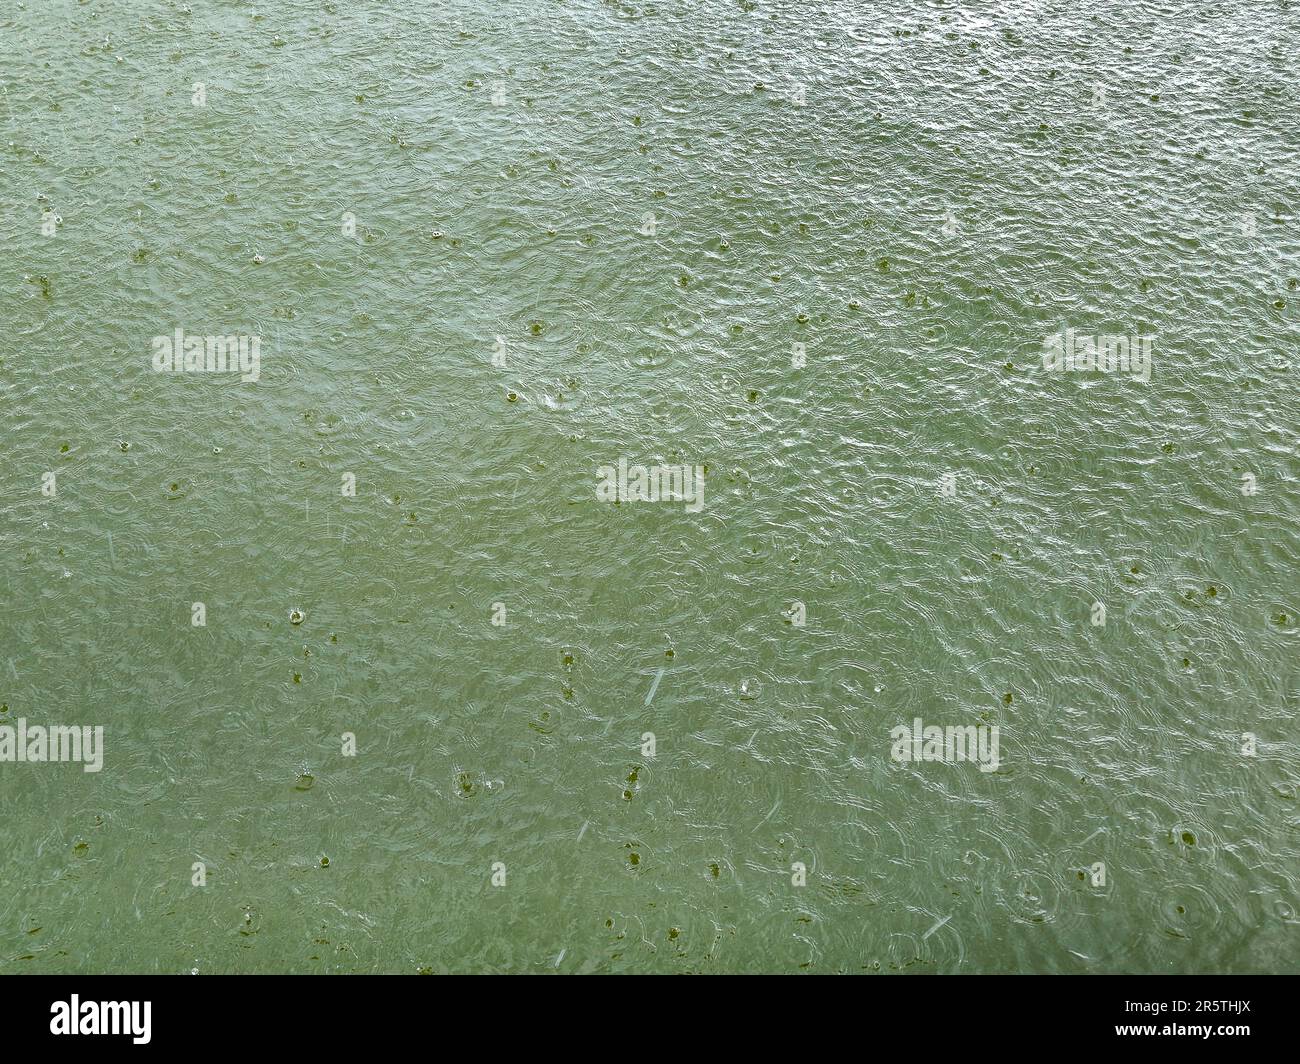 Green lake water with raindrop pattern Stock Photo